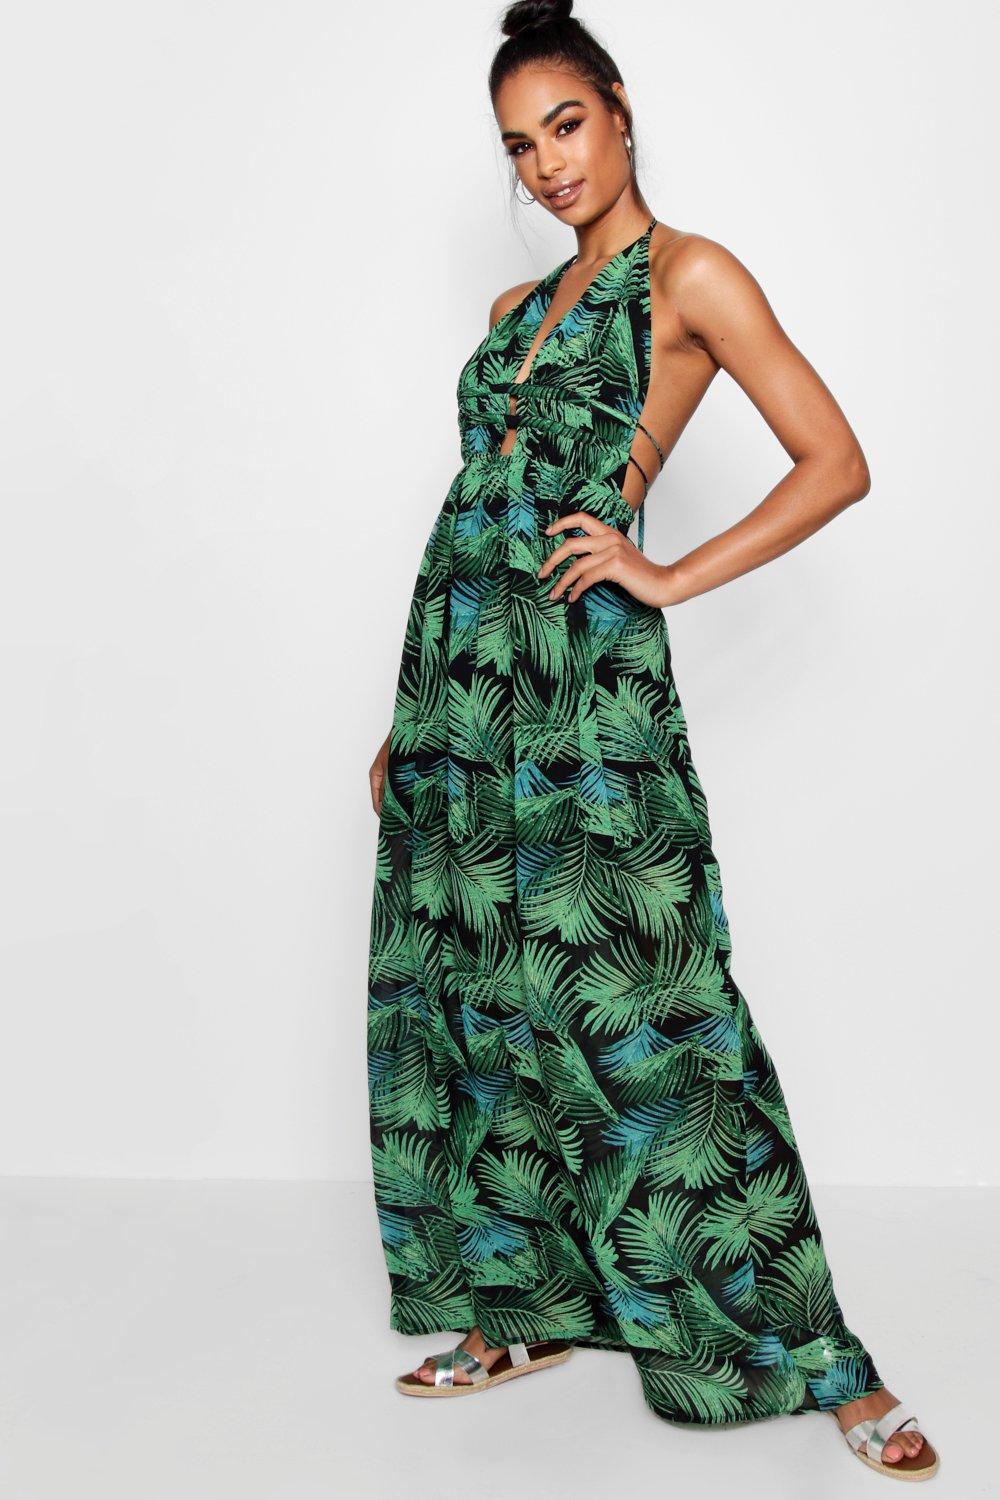 palm tree dress